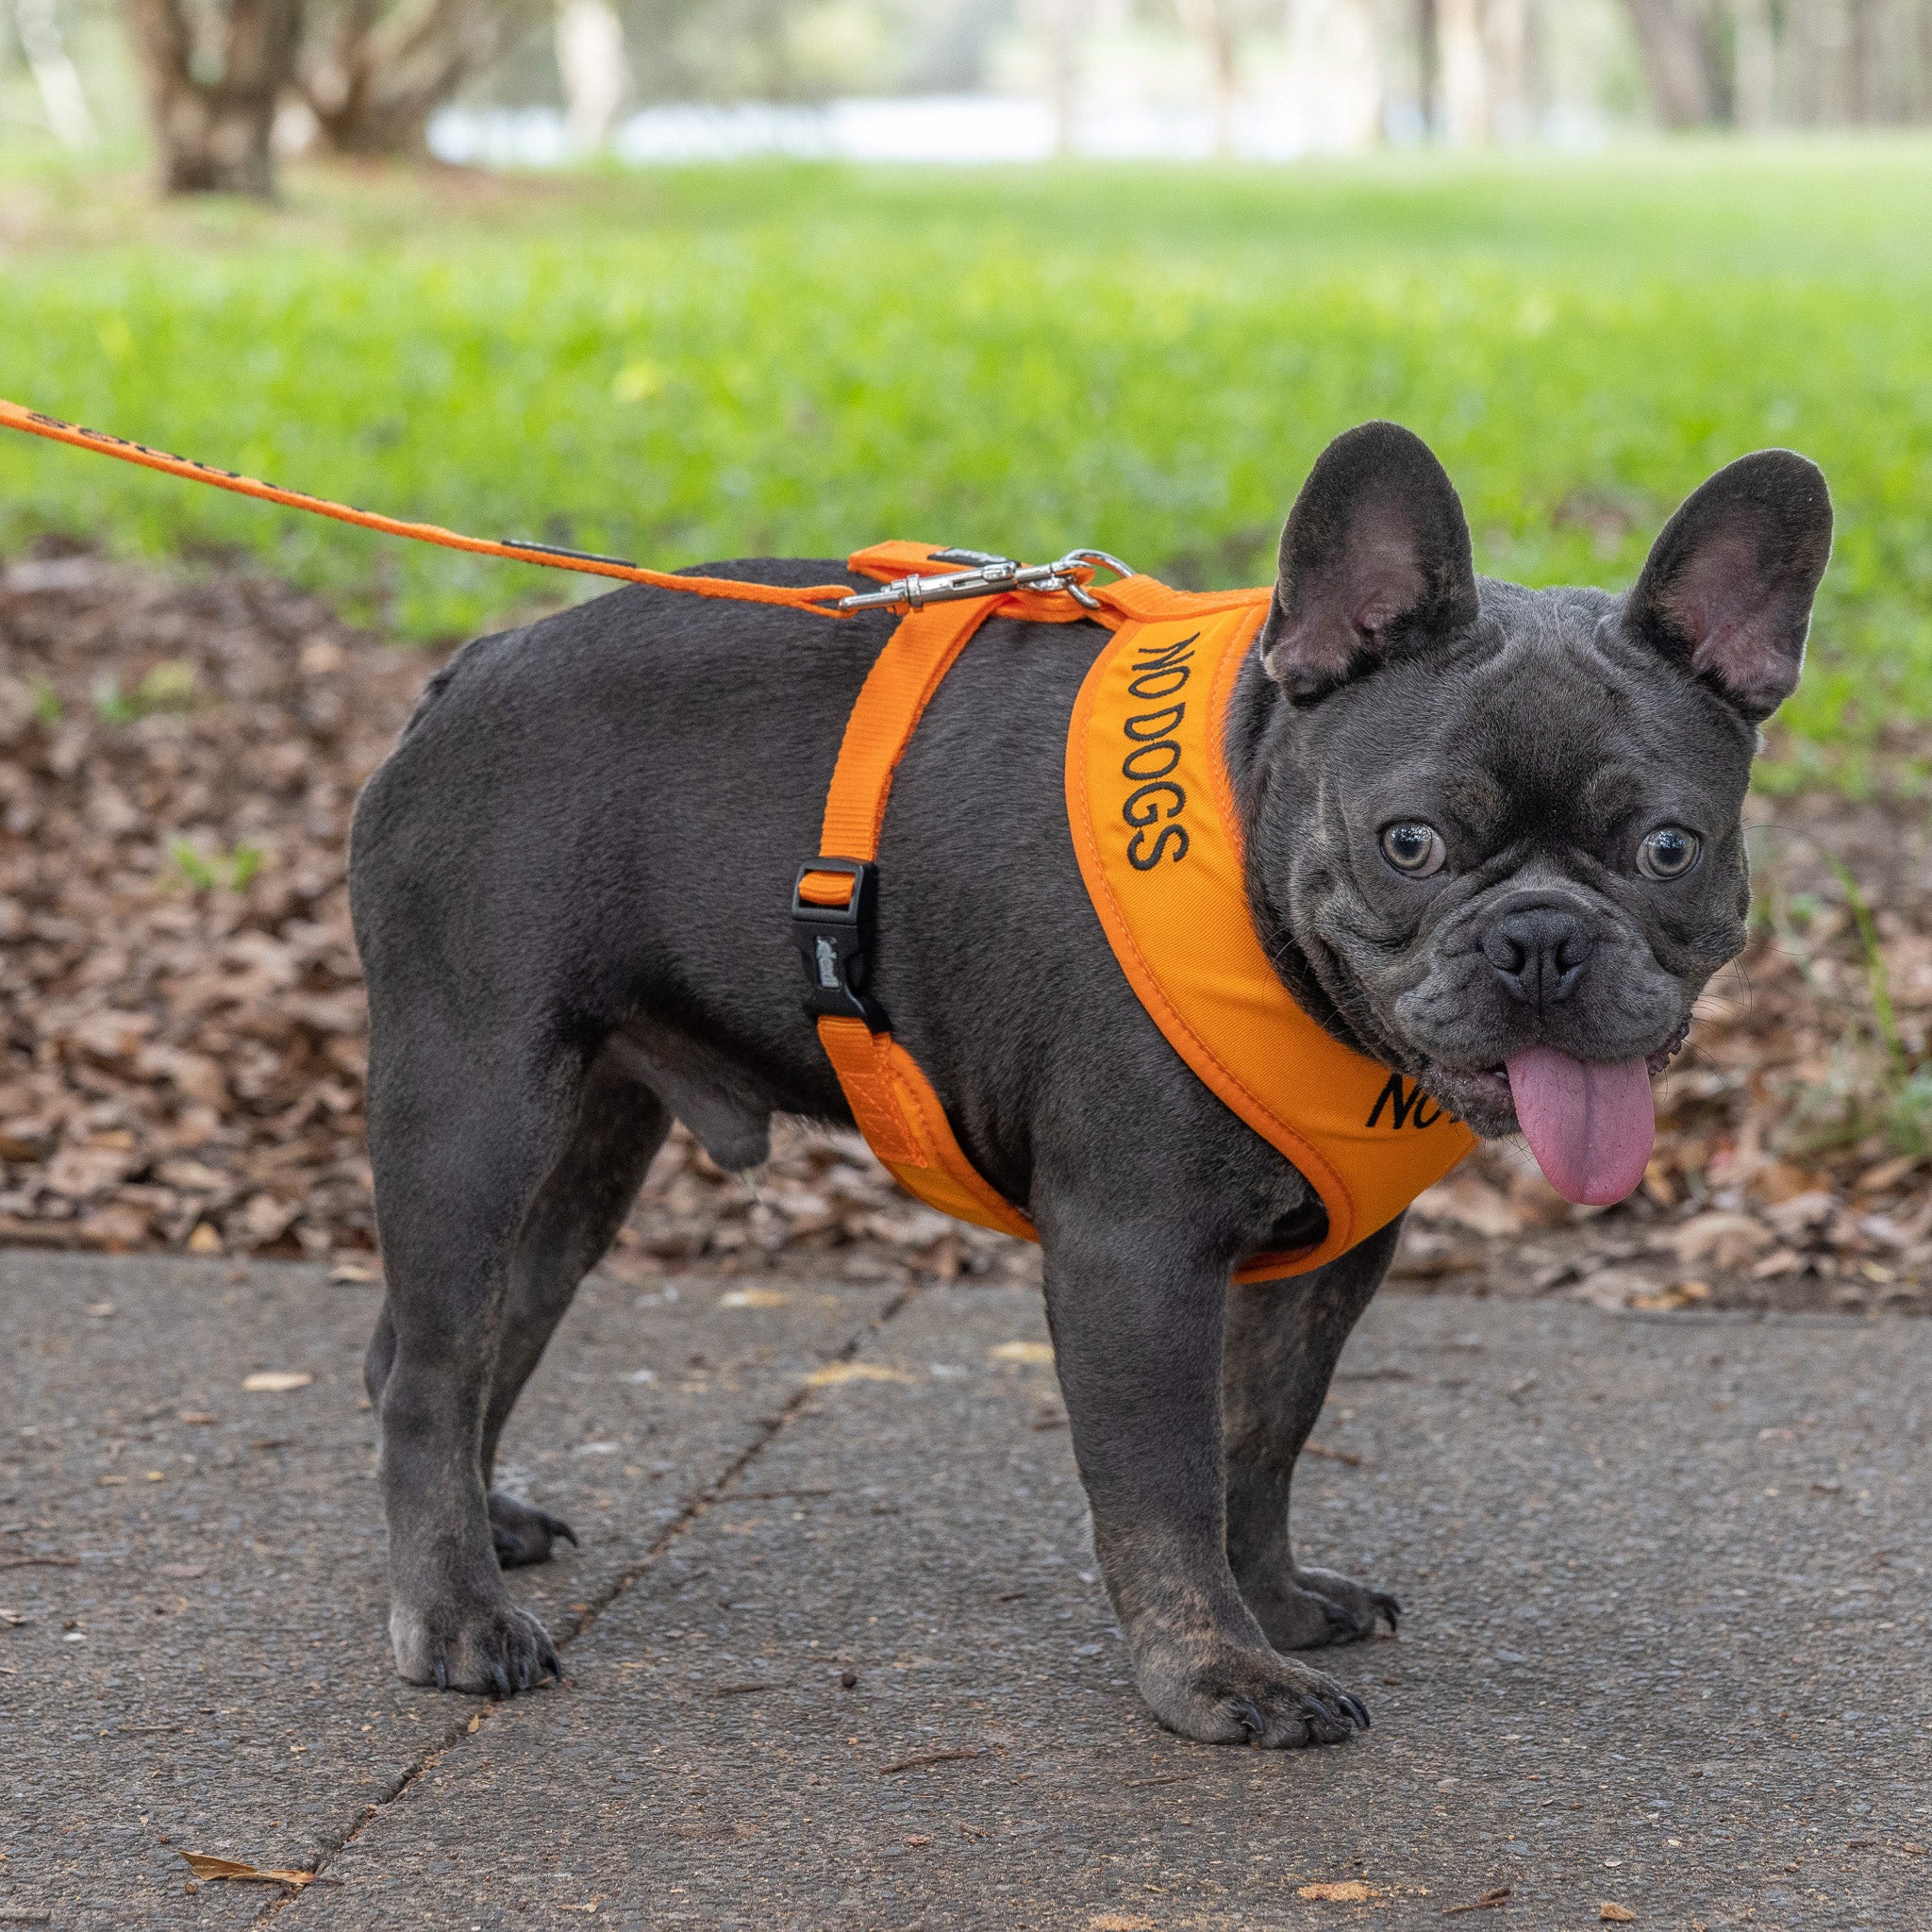 Dexil Friendly Dog Collars Orange NO DOGS Medium adjustable Vest Harness